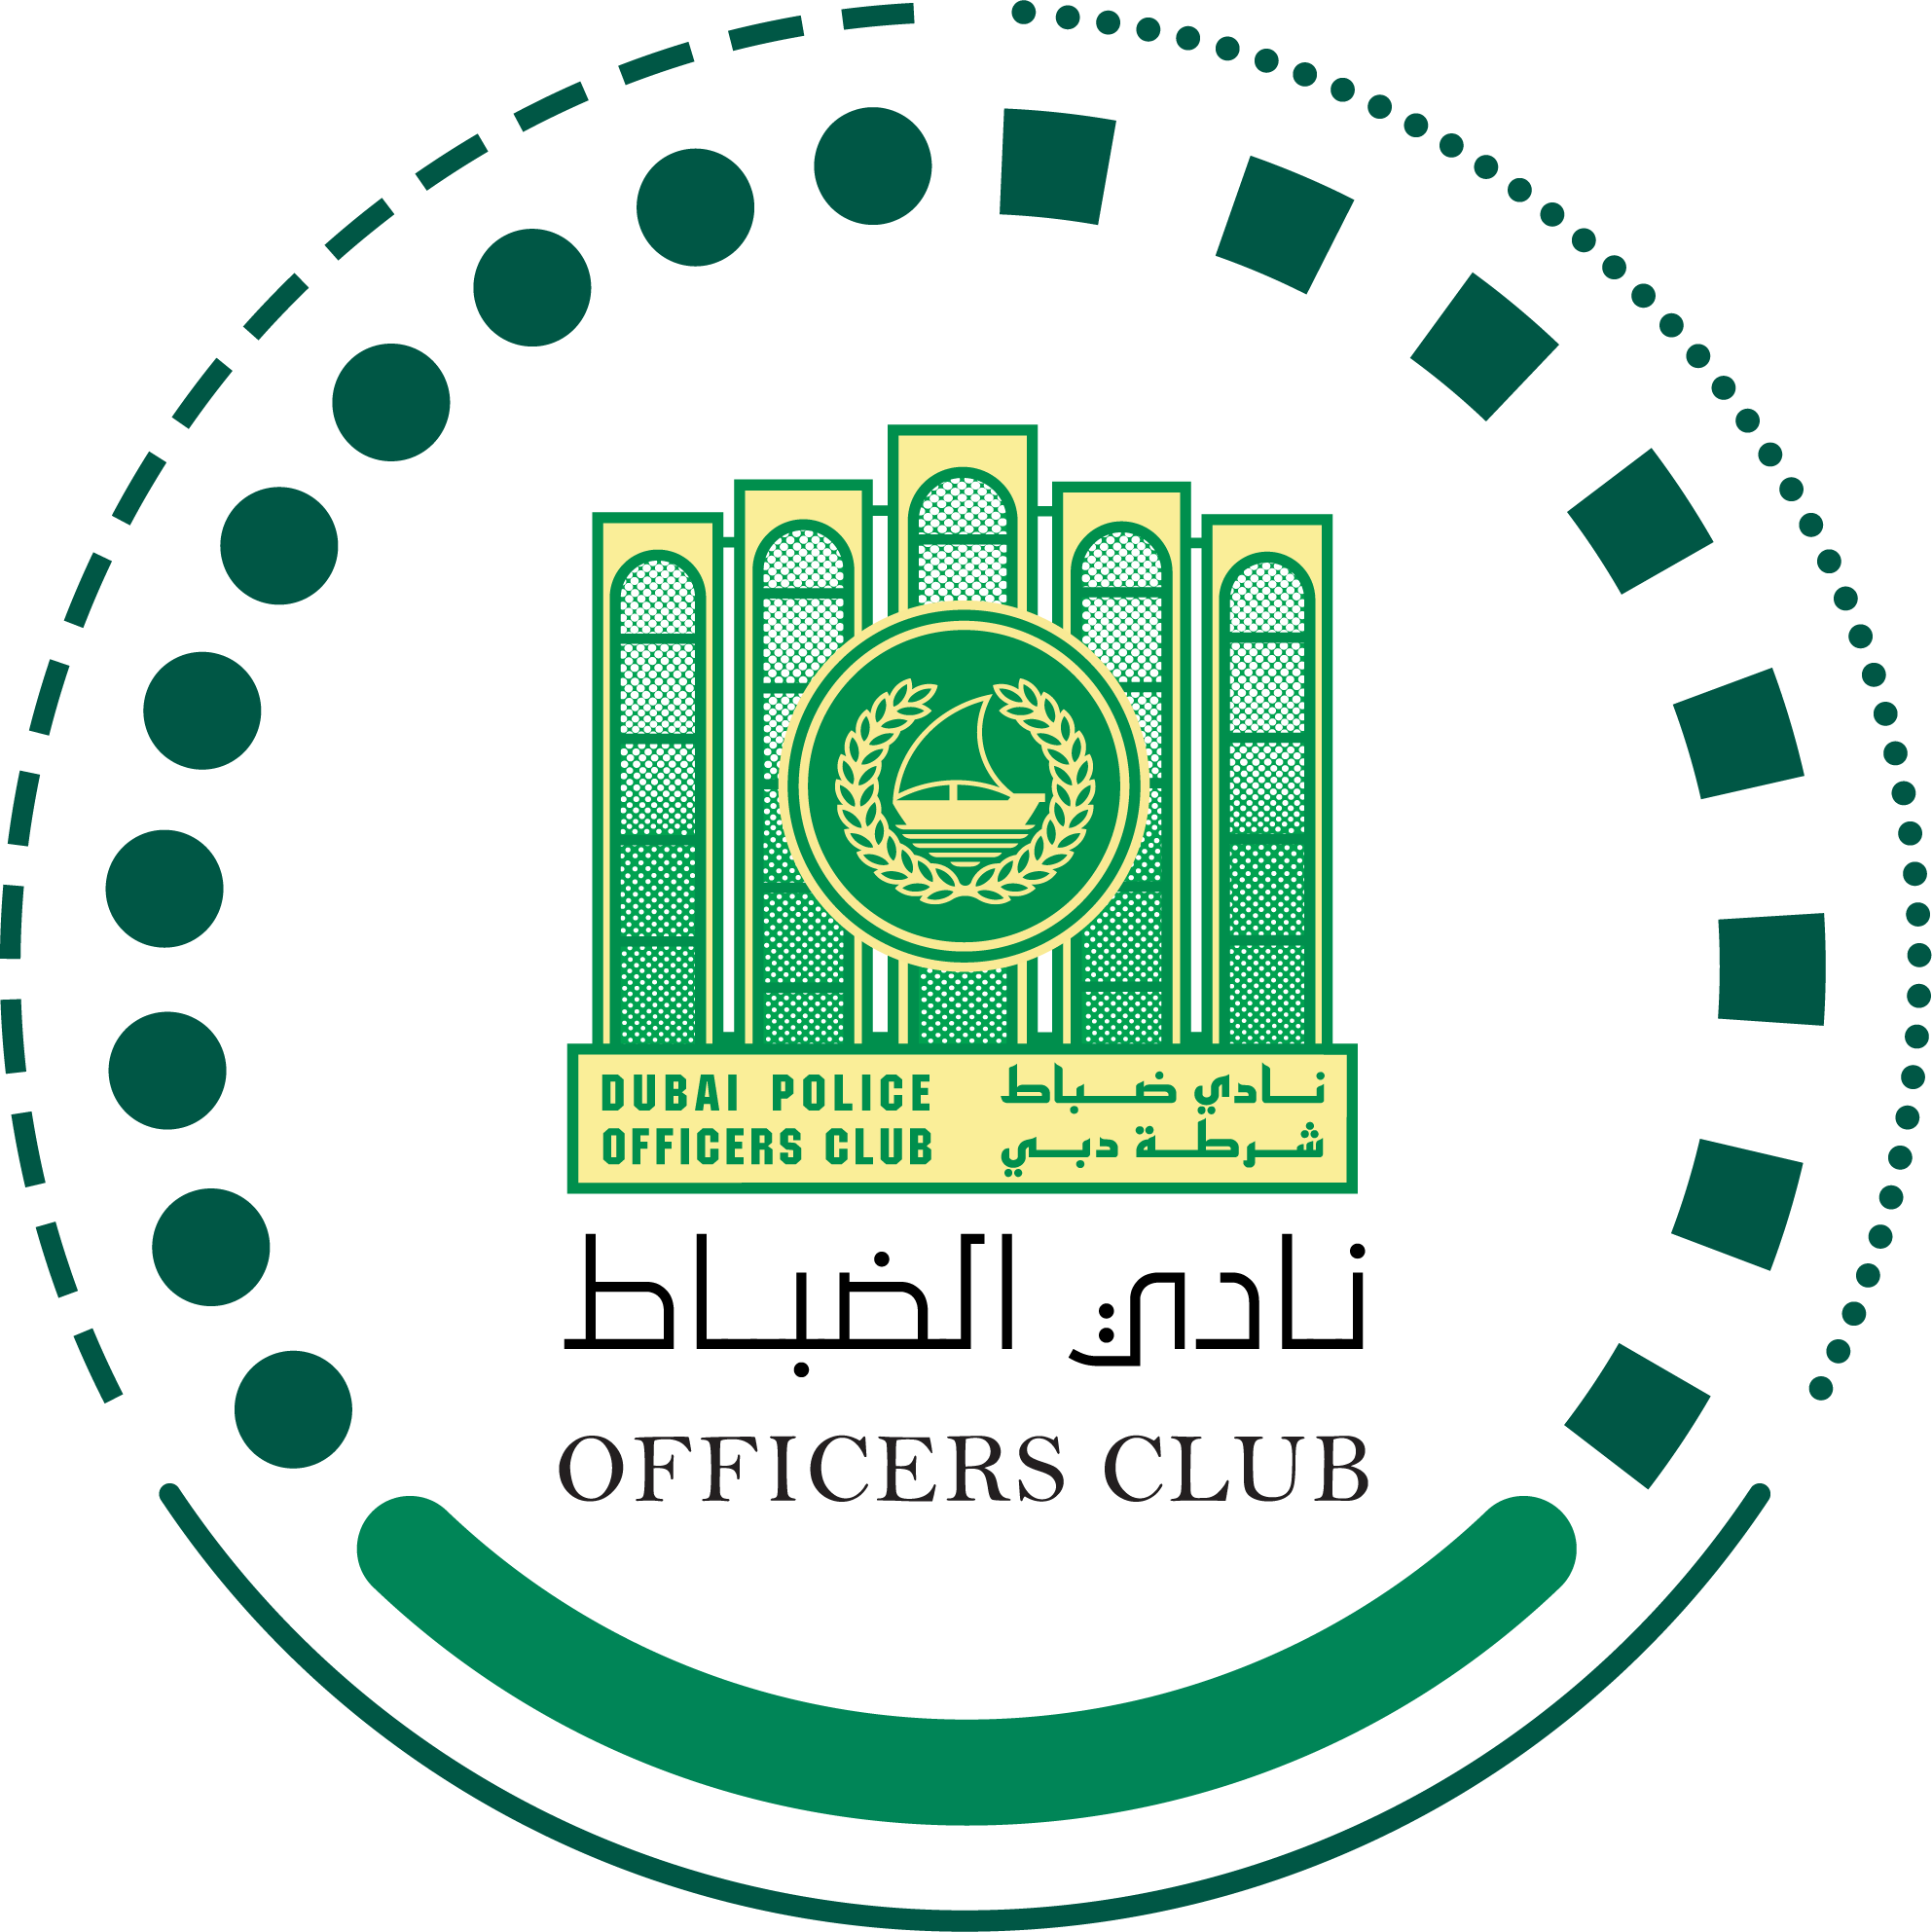 Dubai police officers club